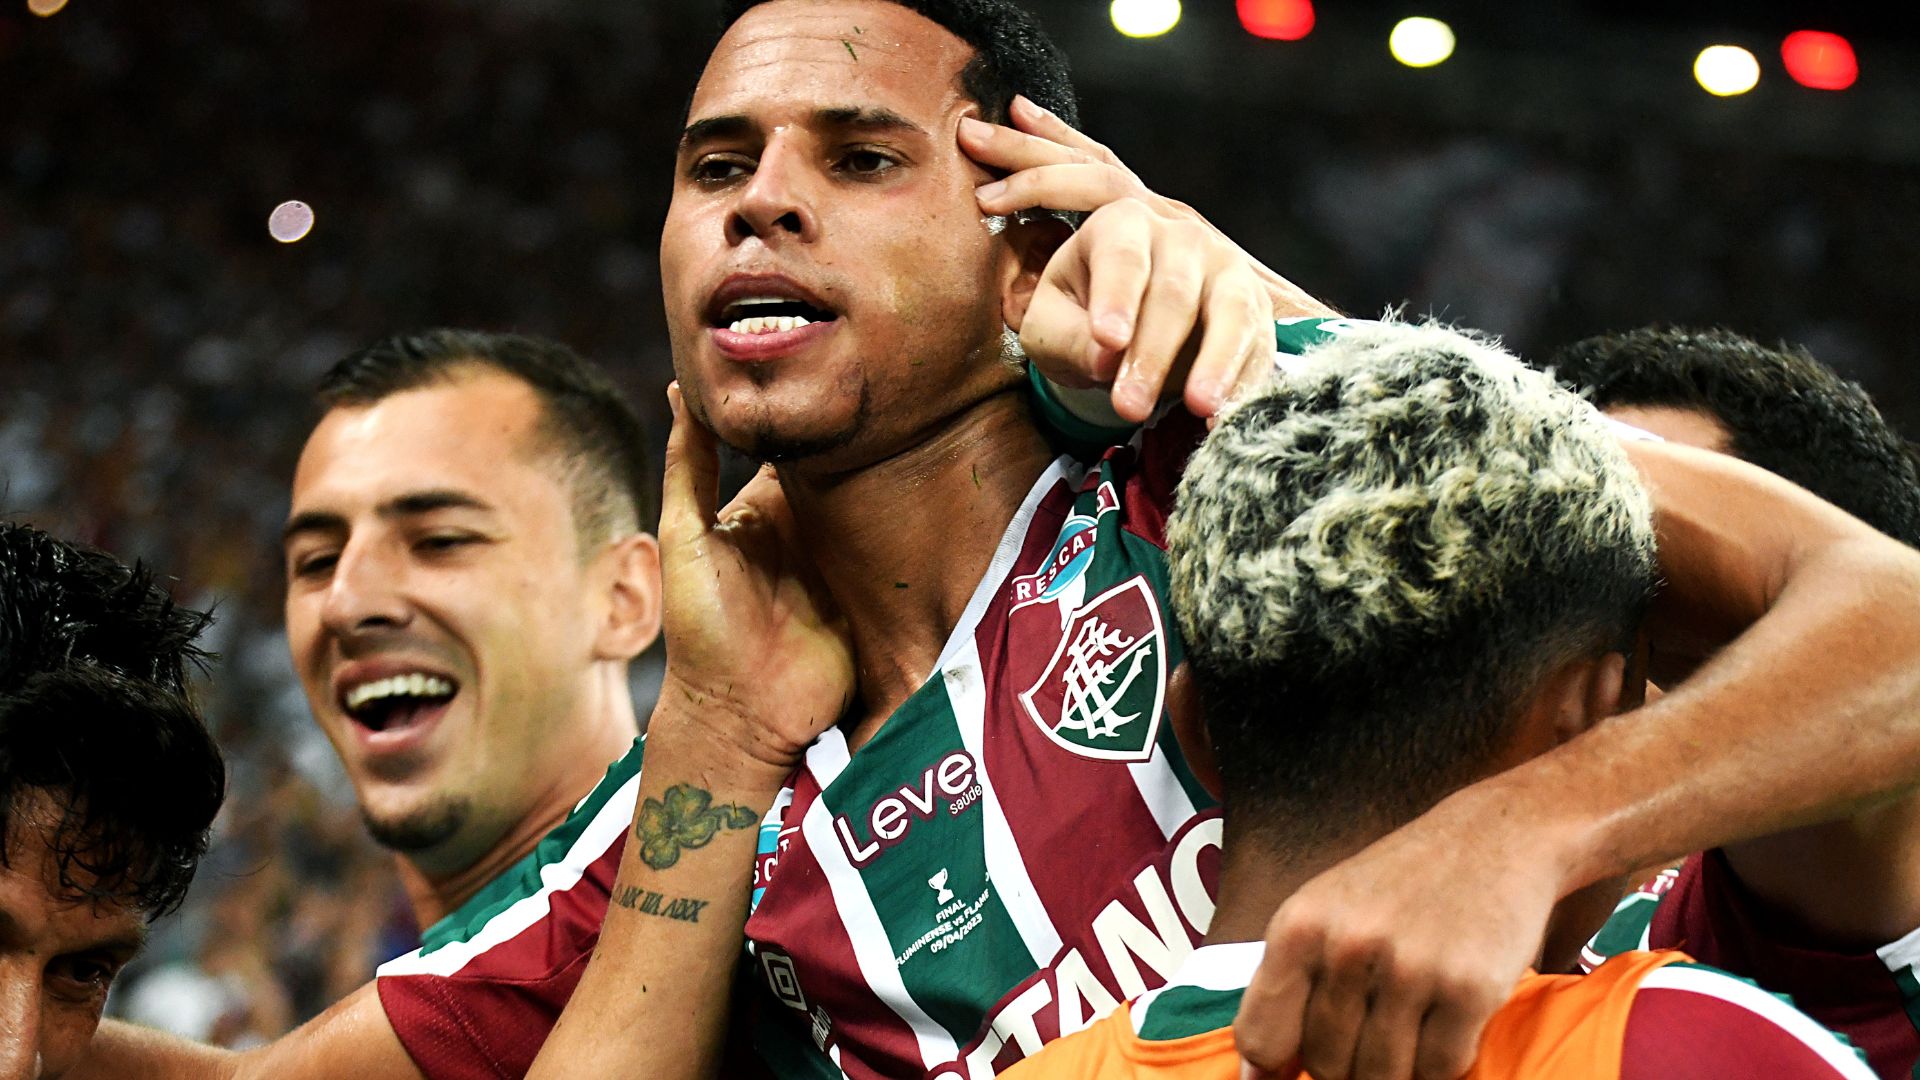 Aleksander comemorando gol marcado na final do Campeonato Carioca (Crédito: Mailson Santana / Fluminense)